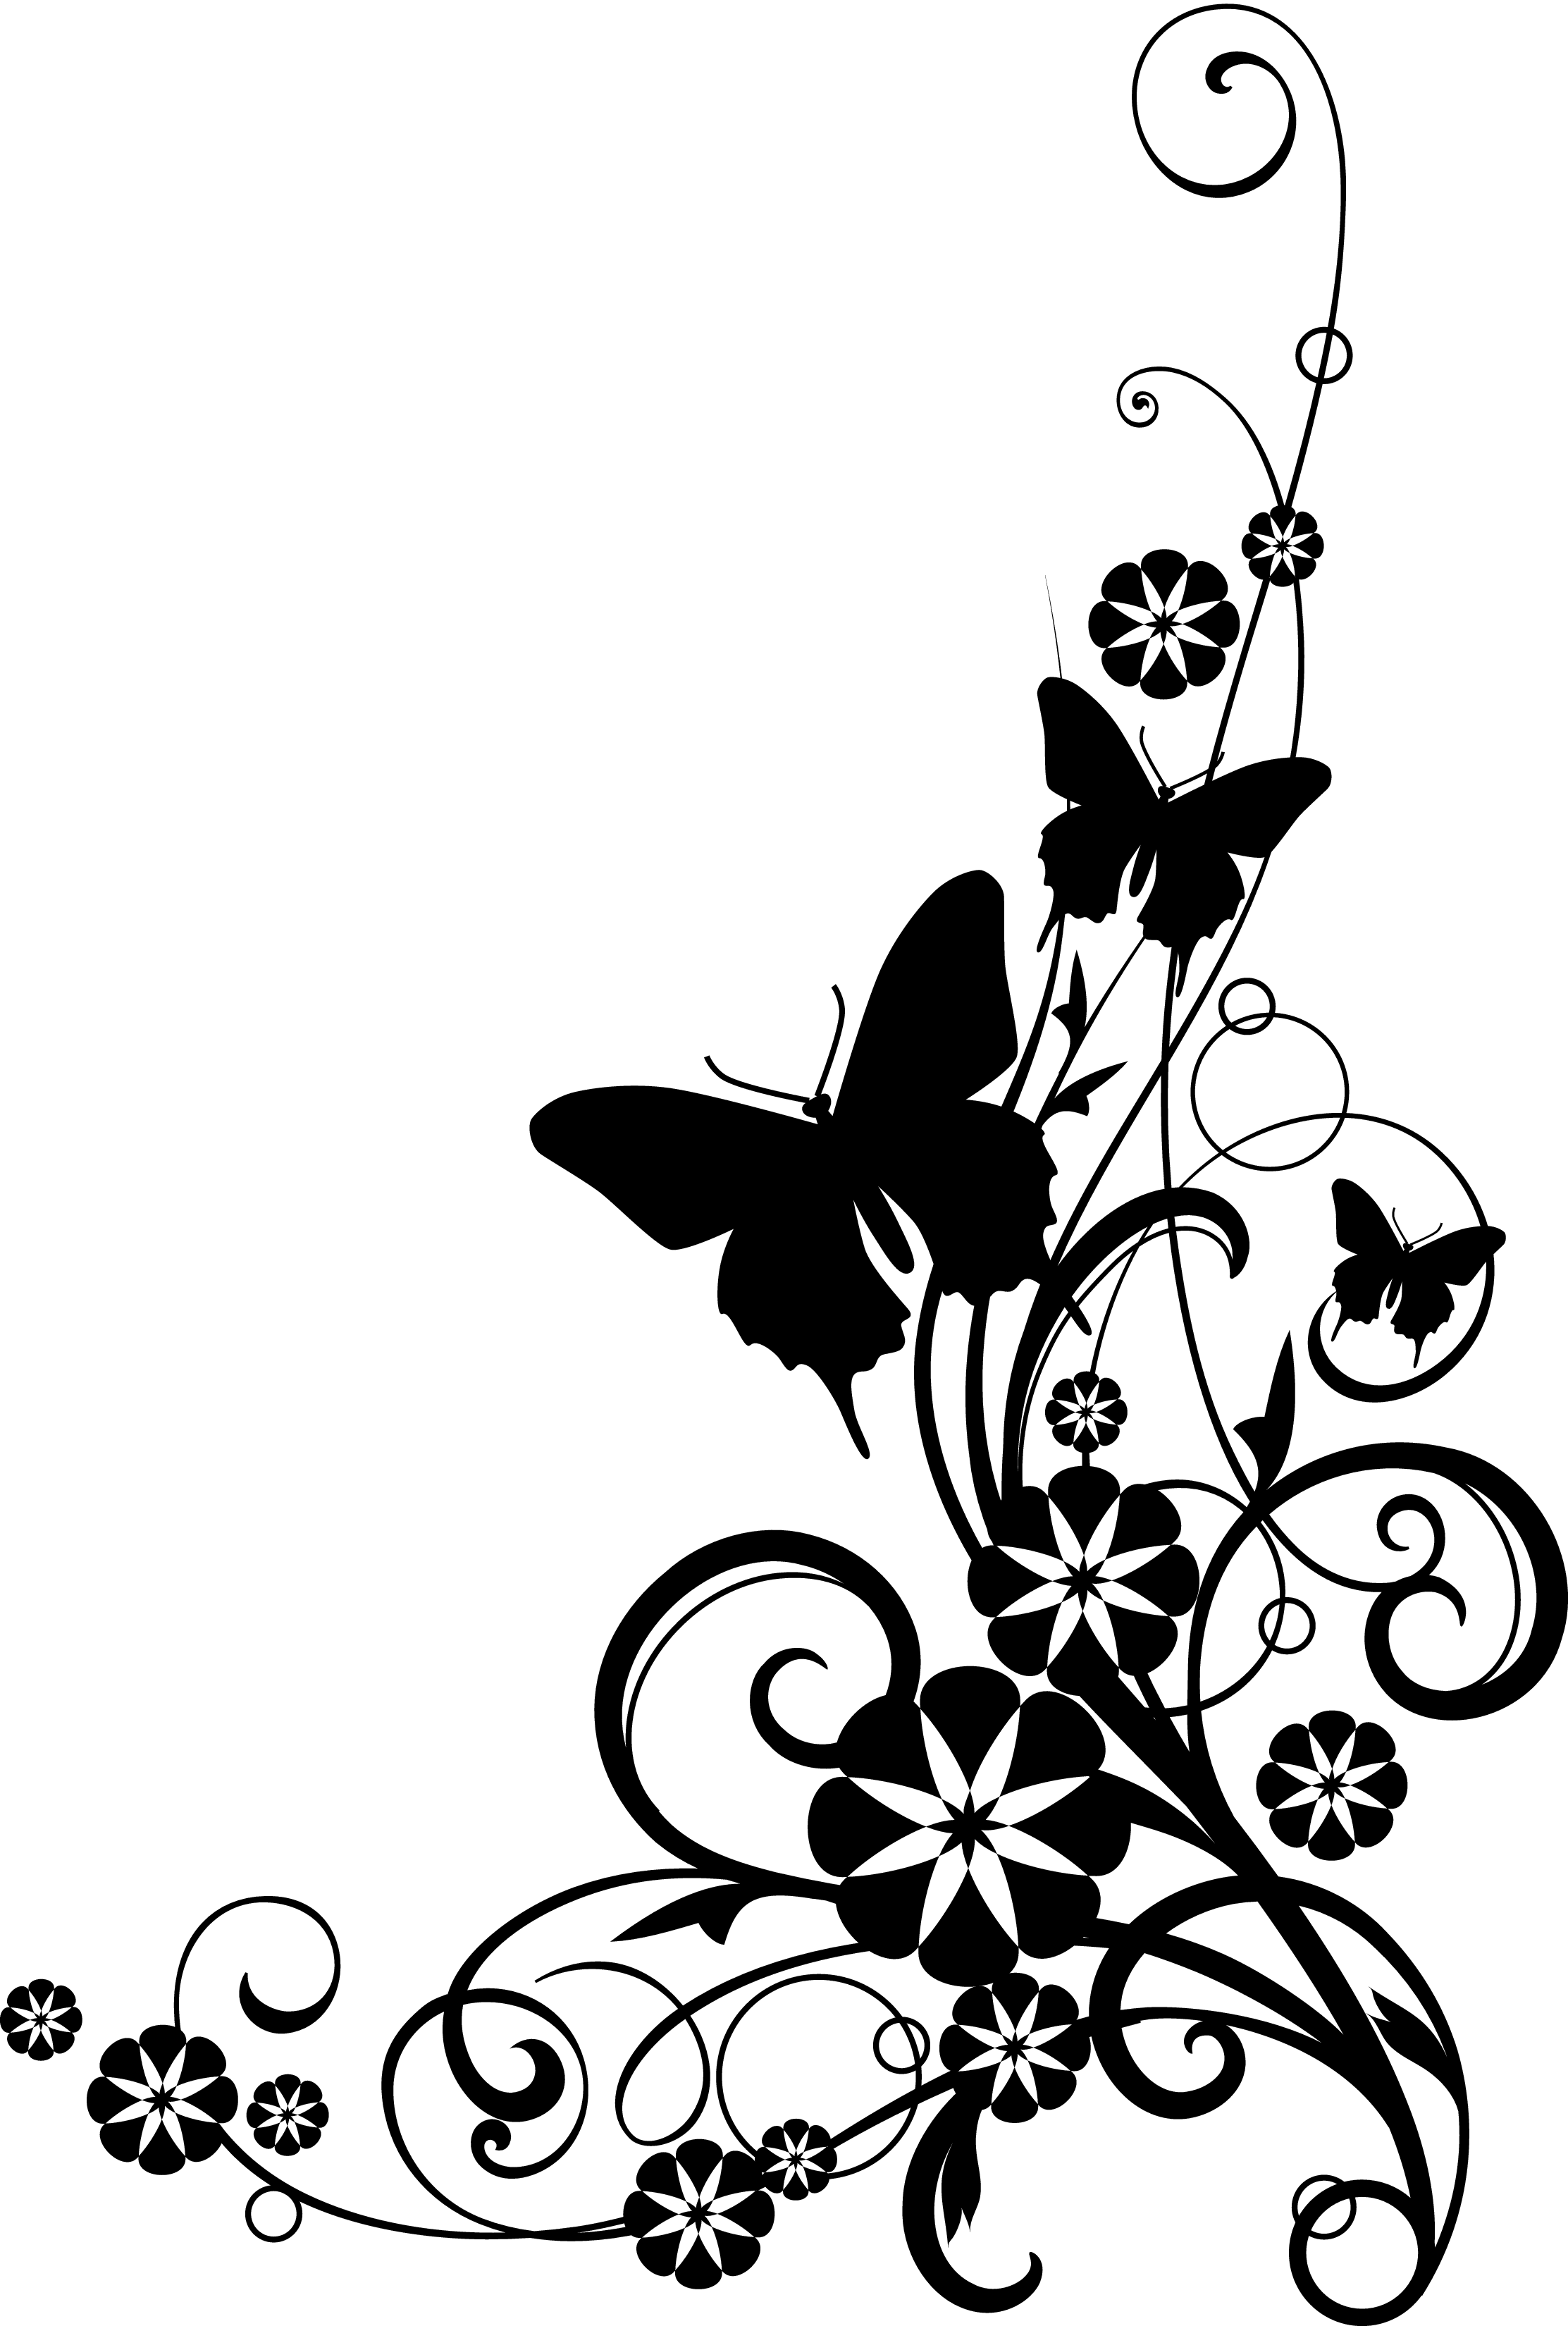 Vines Flowers Design Drawings - ClipArt Best